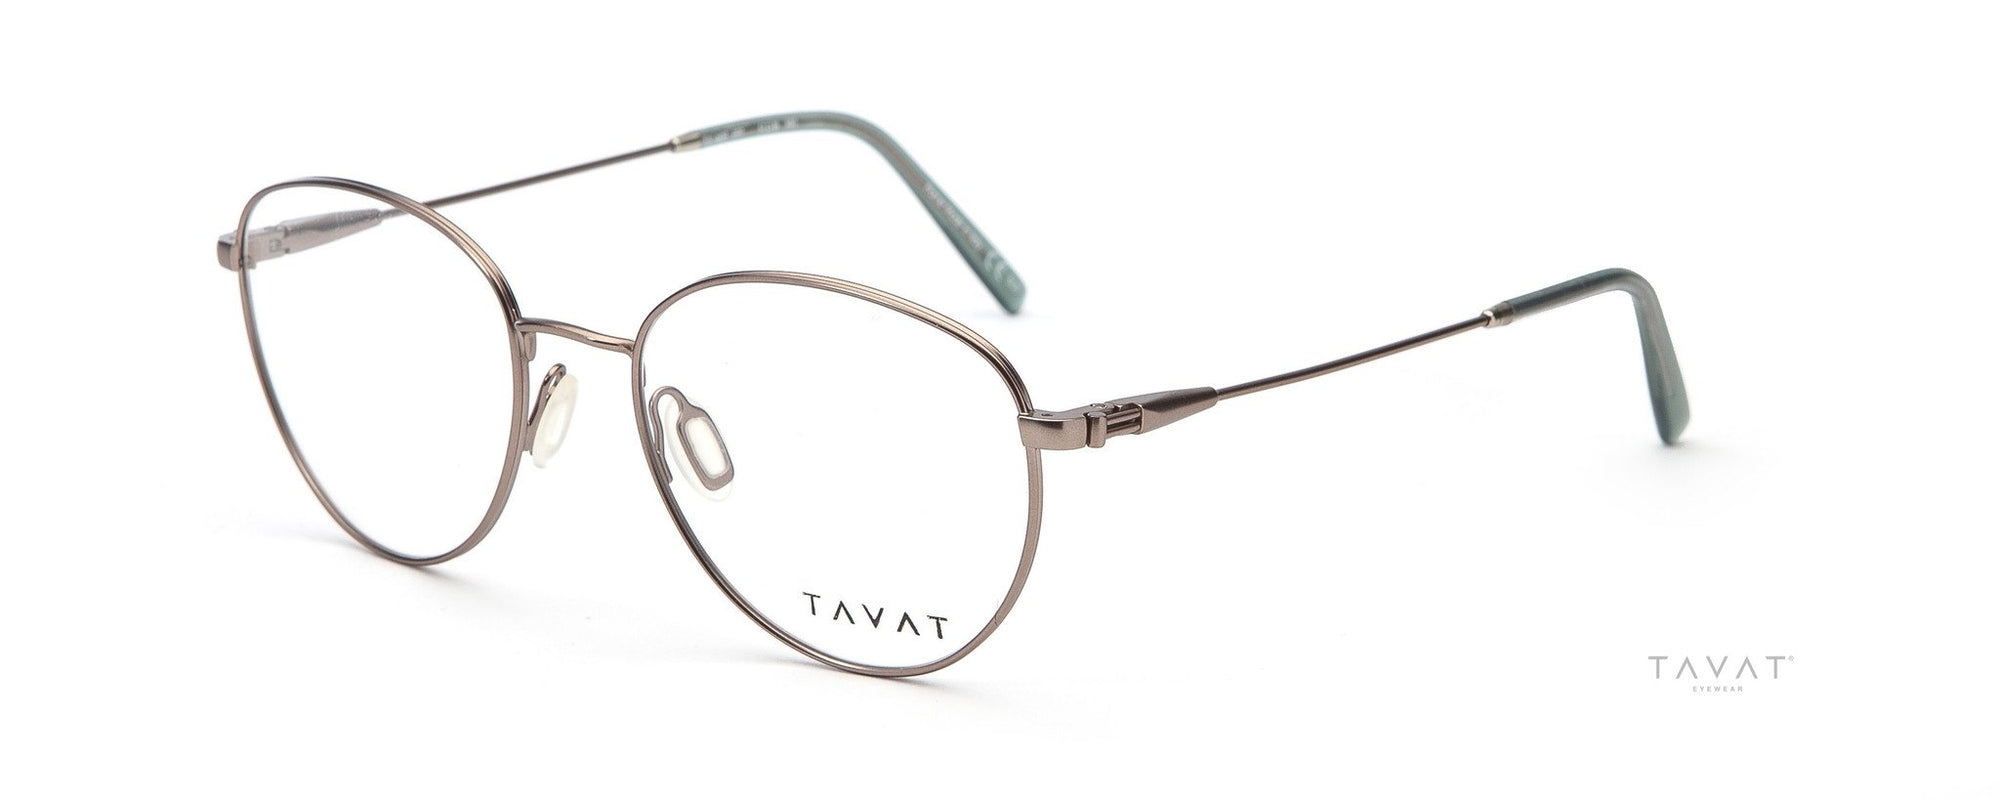 Alexander Daas - Tavat Owain EX401T Eyeglasses - Pink Panther - Side View